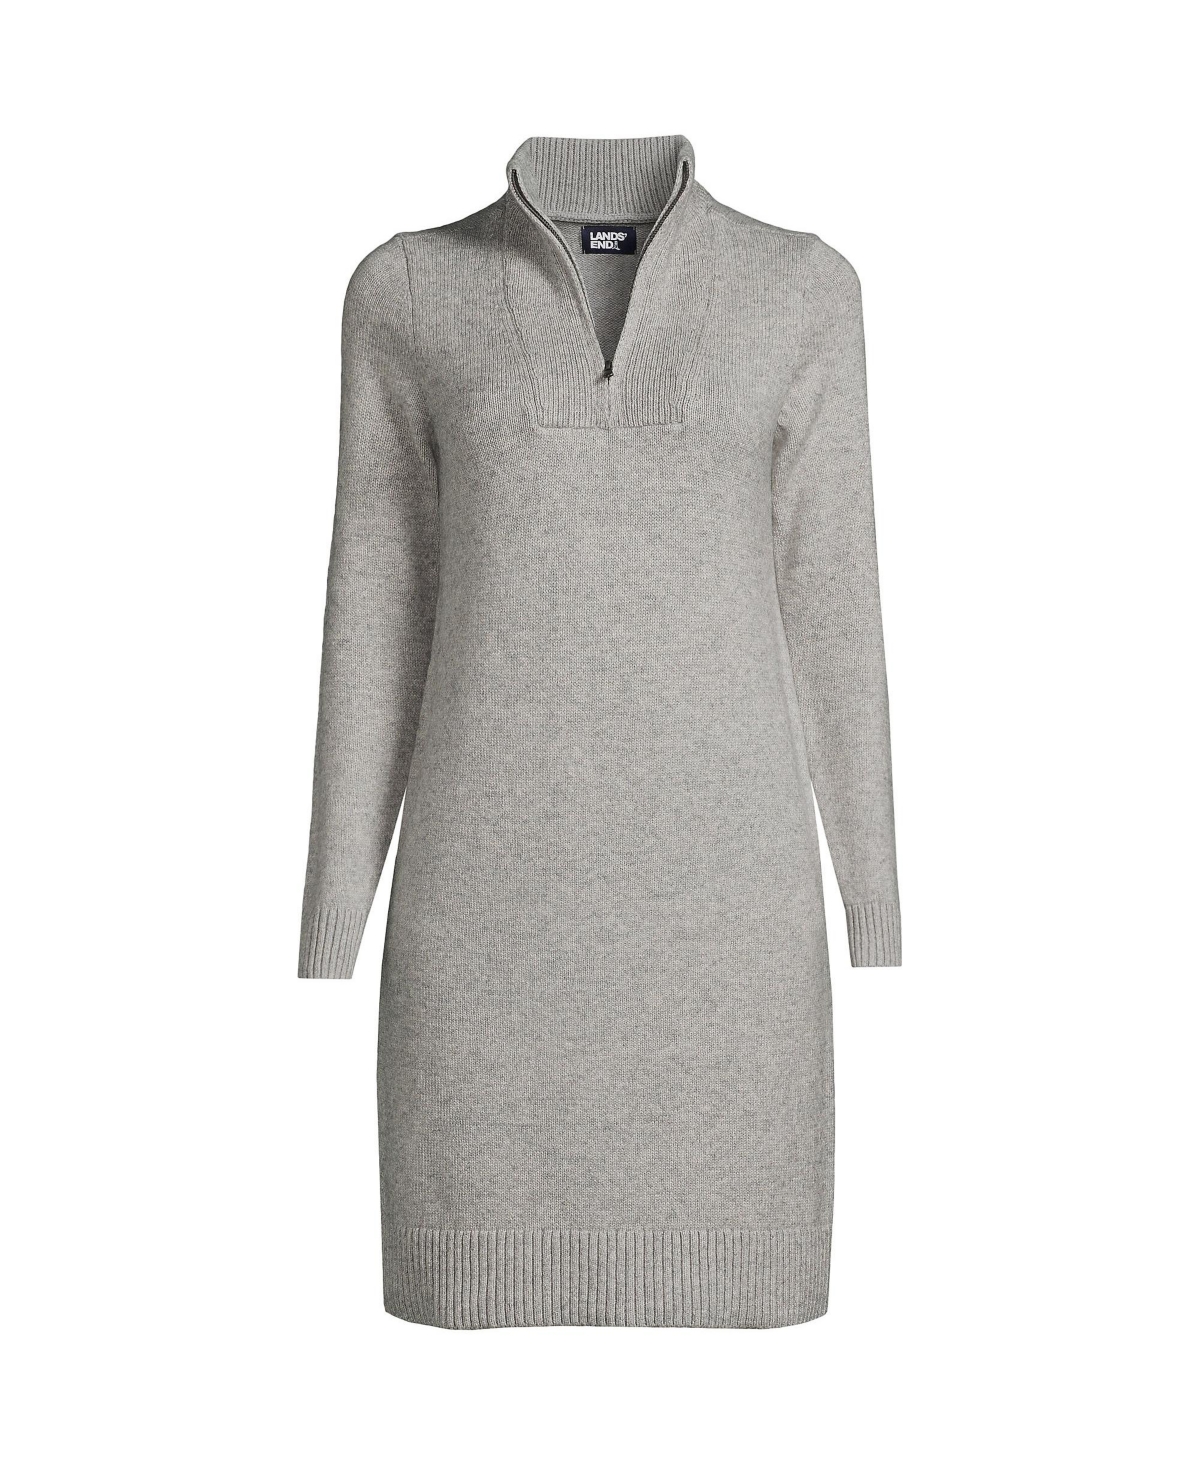 Women's Cozy Lofty Sweater Dress - Gray heather